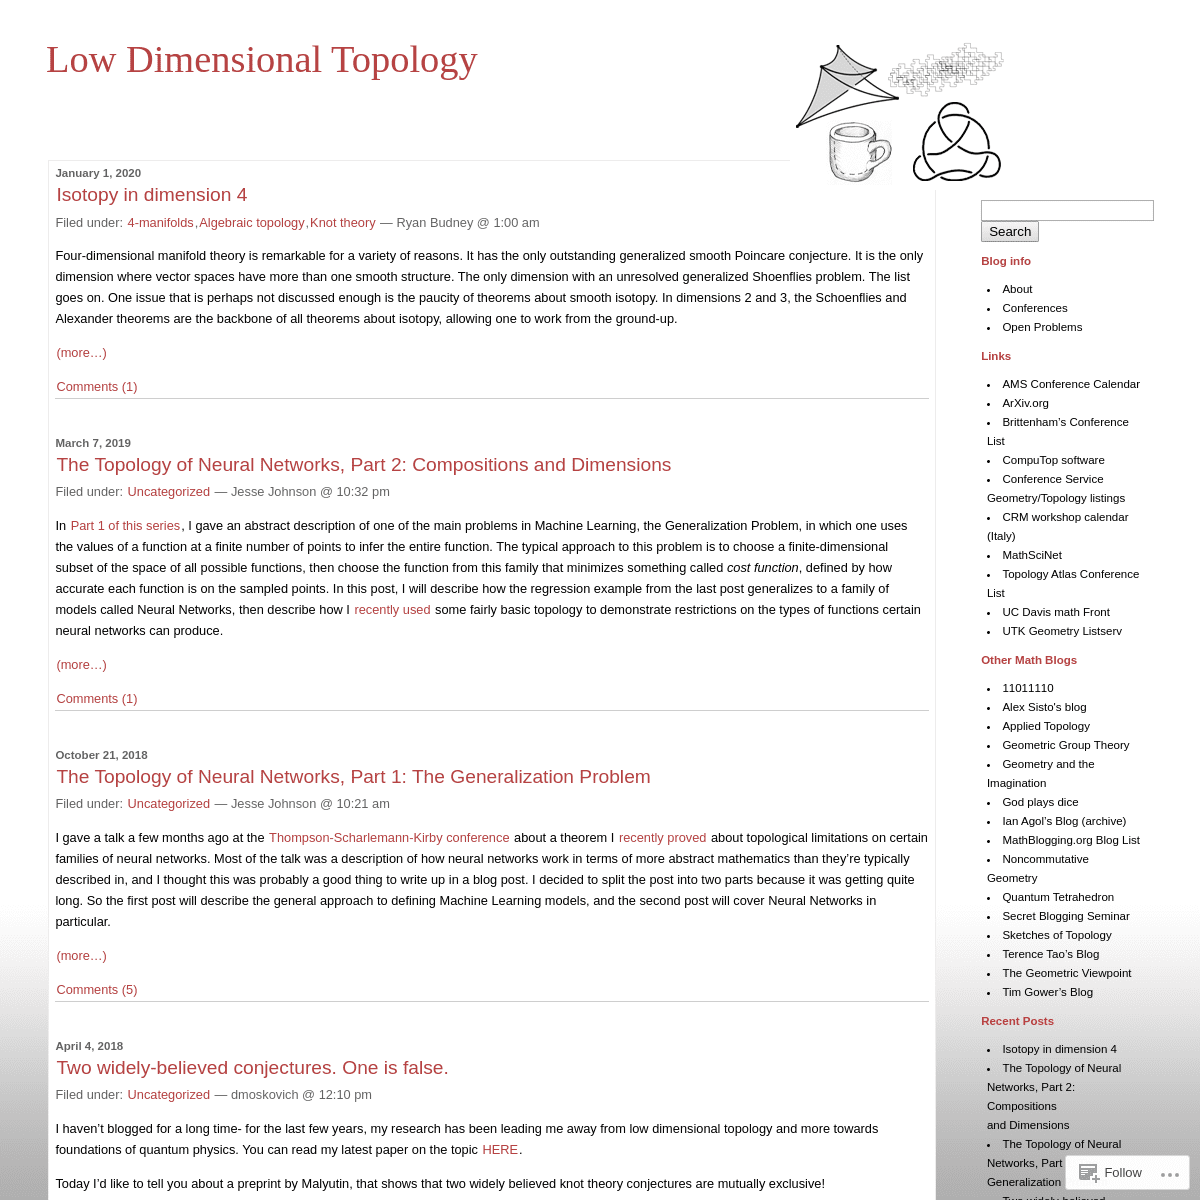 A complete backup of ldtopology.wordpress.com